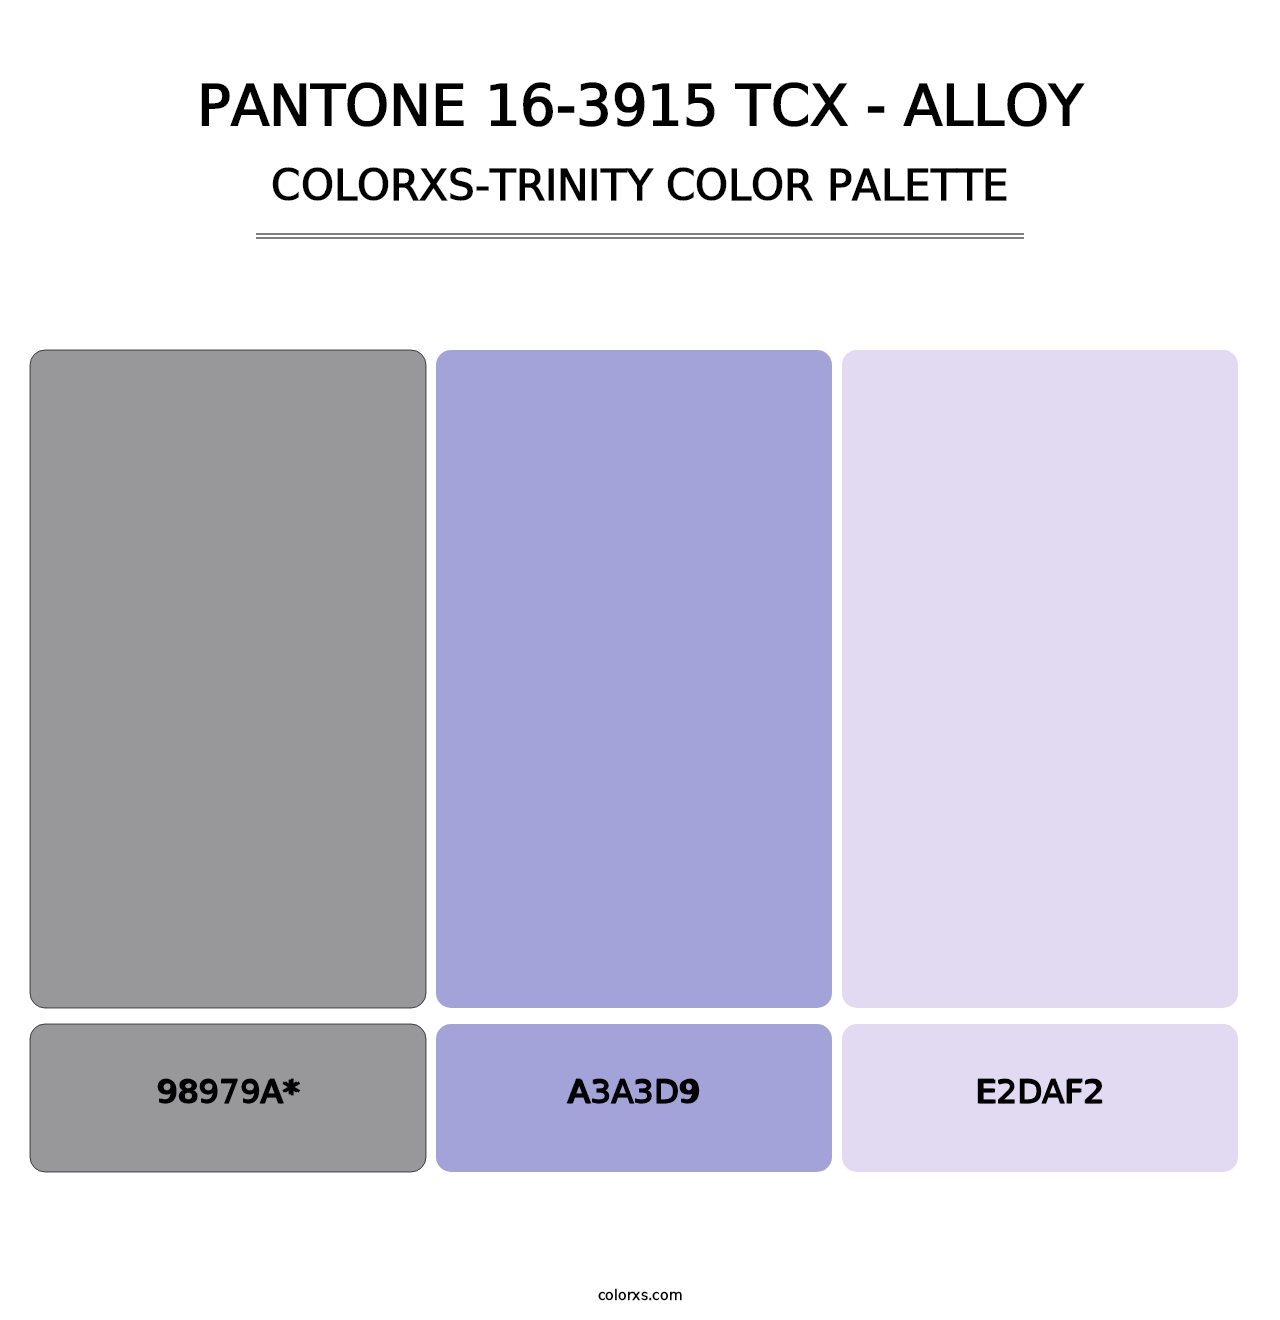 PANTONE 16-3915 TCX - Alloy - Colorxs Trinity Palette